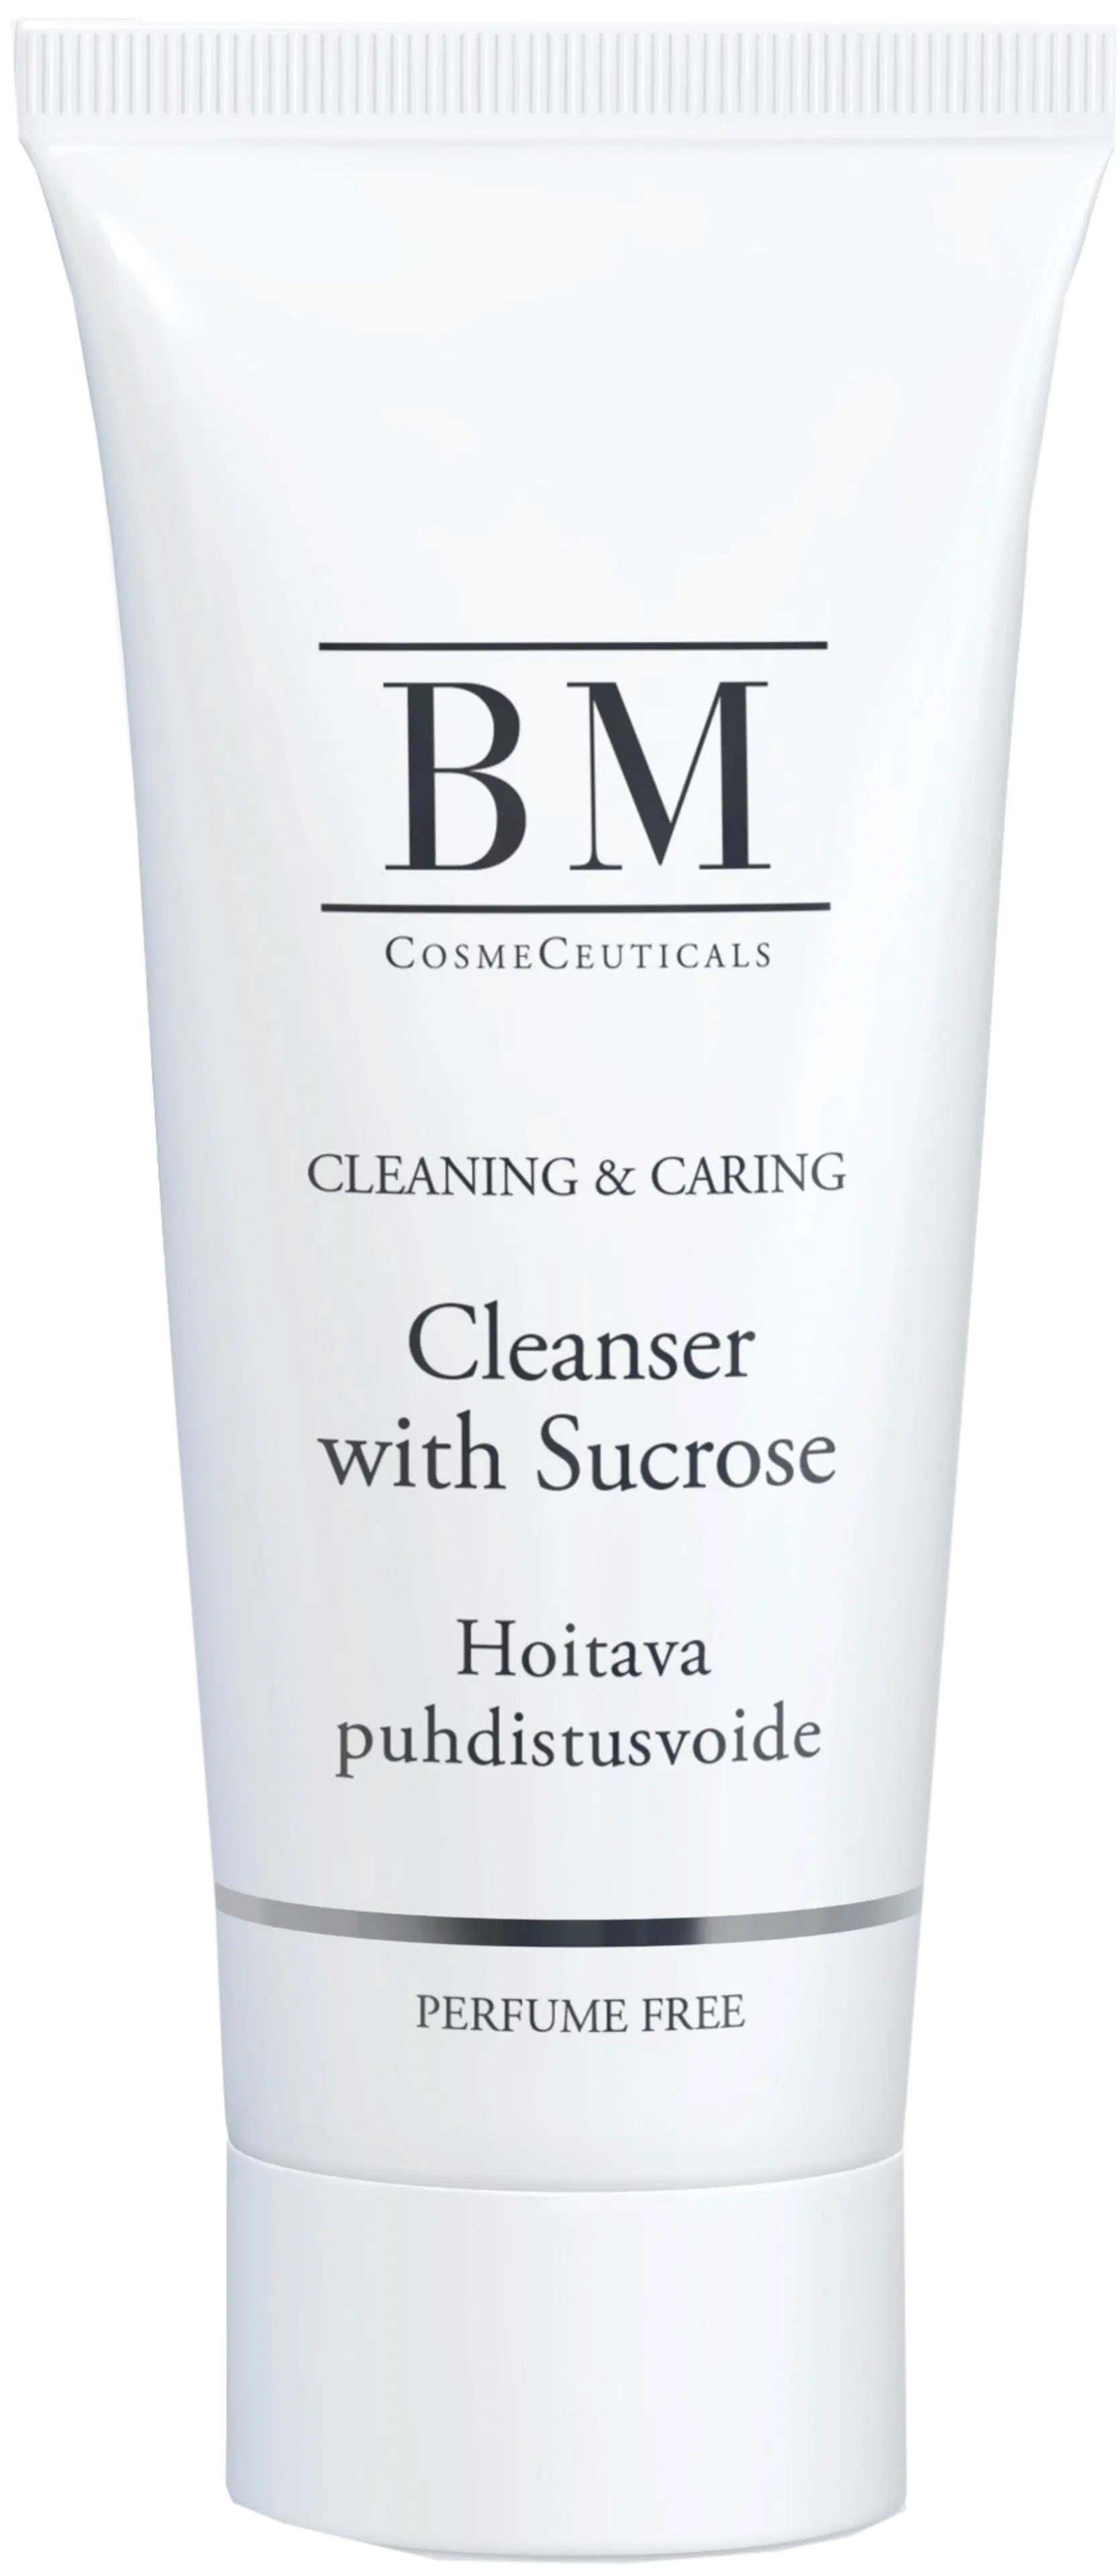 BM CosmeCeuticals Cleanser with Sucrose puhdistusvoide 100 ml